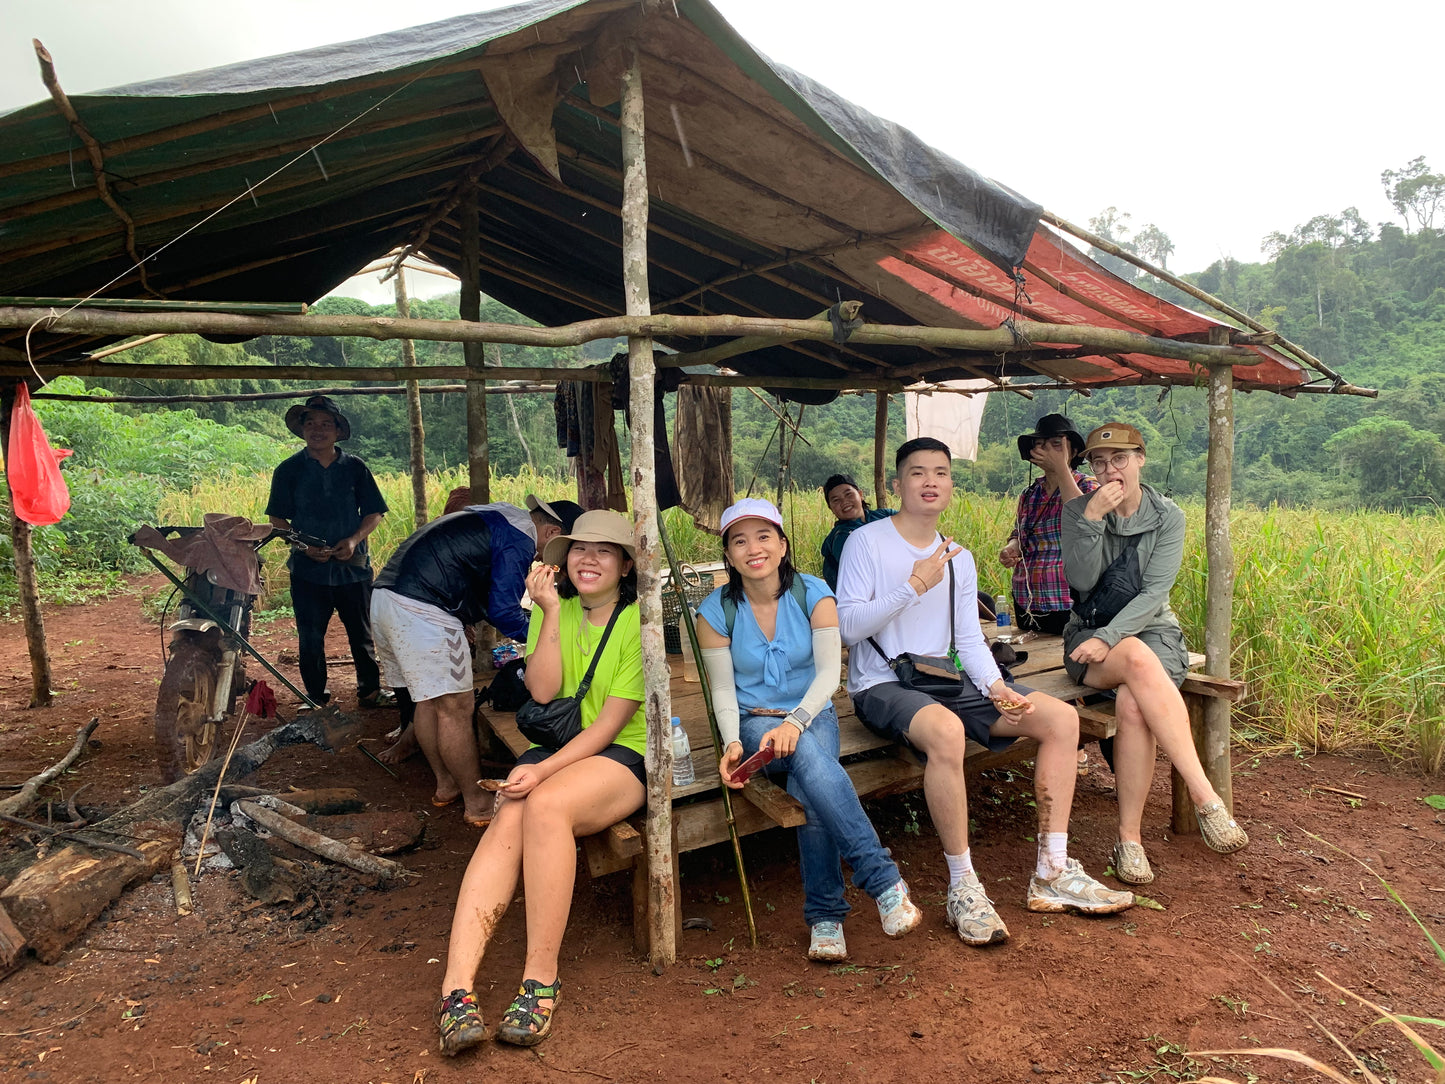 SA3C (3 DAYS): Mondulkiri, Endless Green Meadows in Cambodia